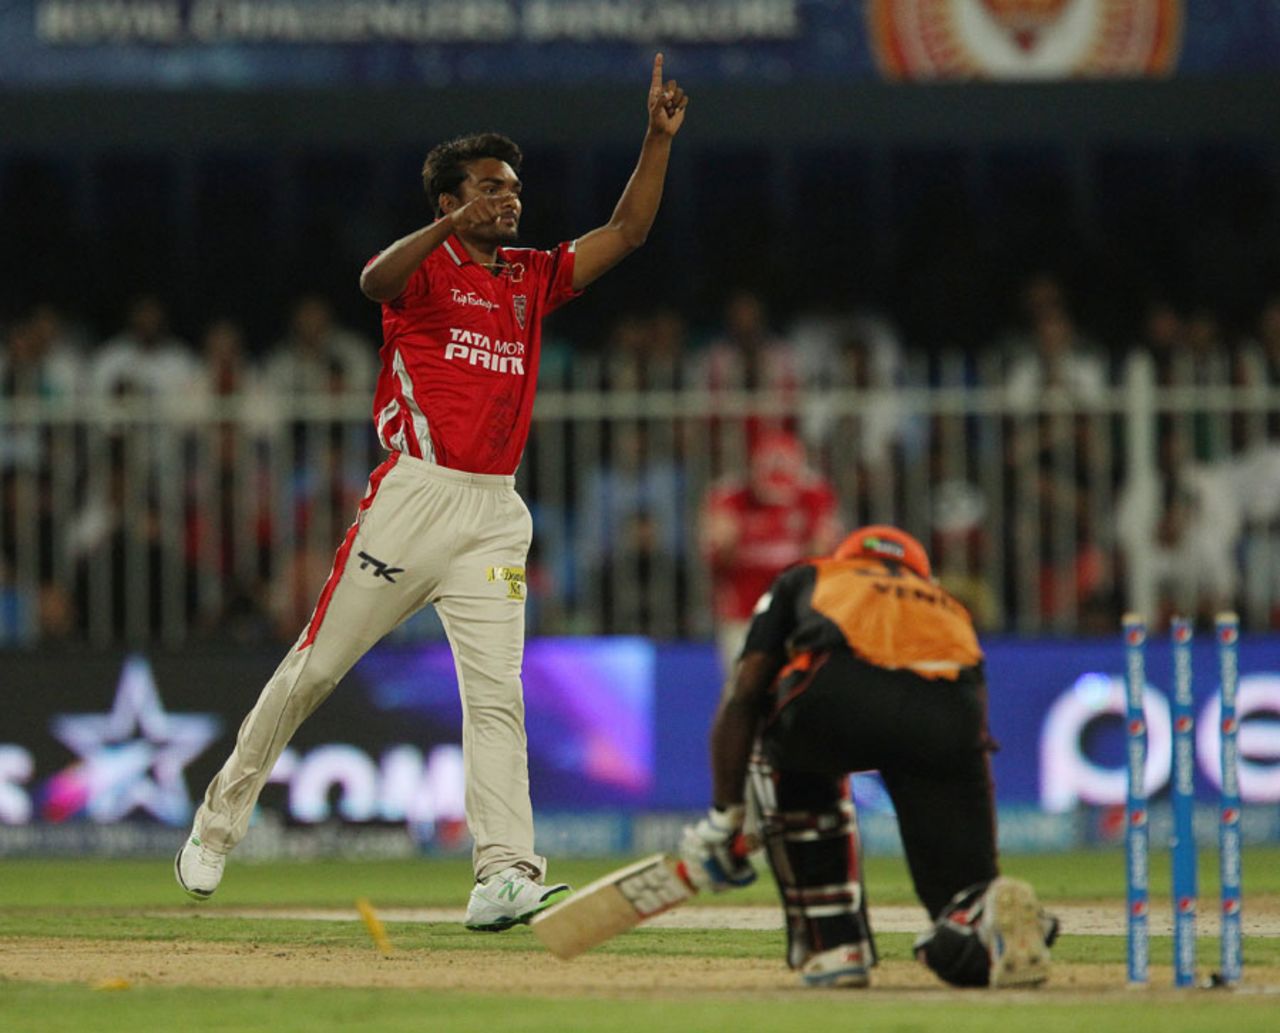 Venugopal Rao was bowled for 11 by Sandeep Sharma, Kings XI Punjab v Sunrisers Hyderabad, IPL 2014, Sharjah, April 22, 2014